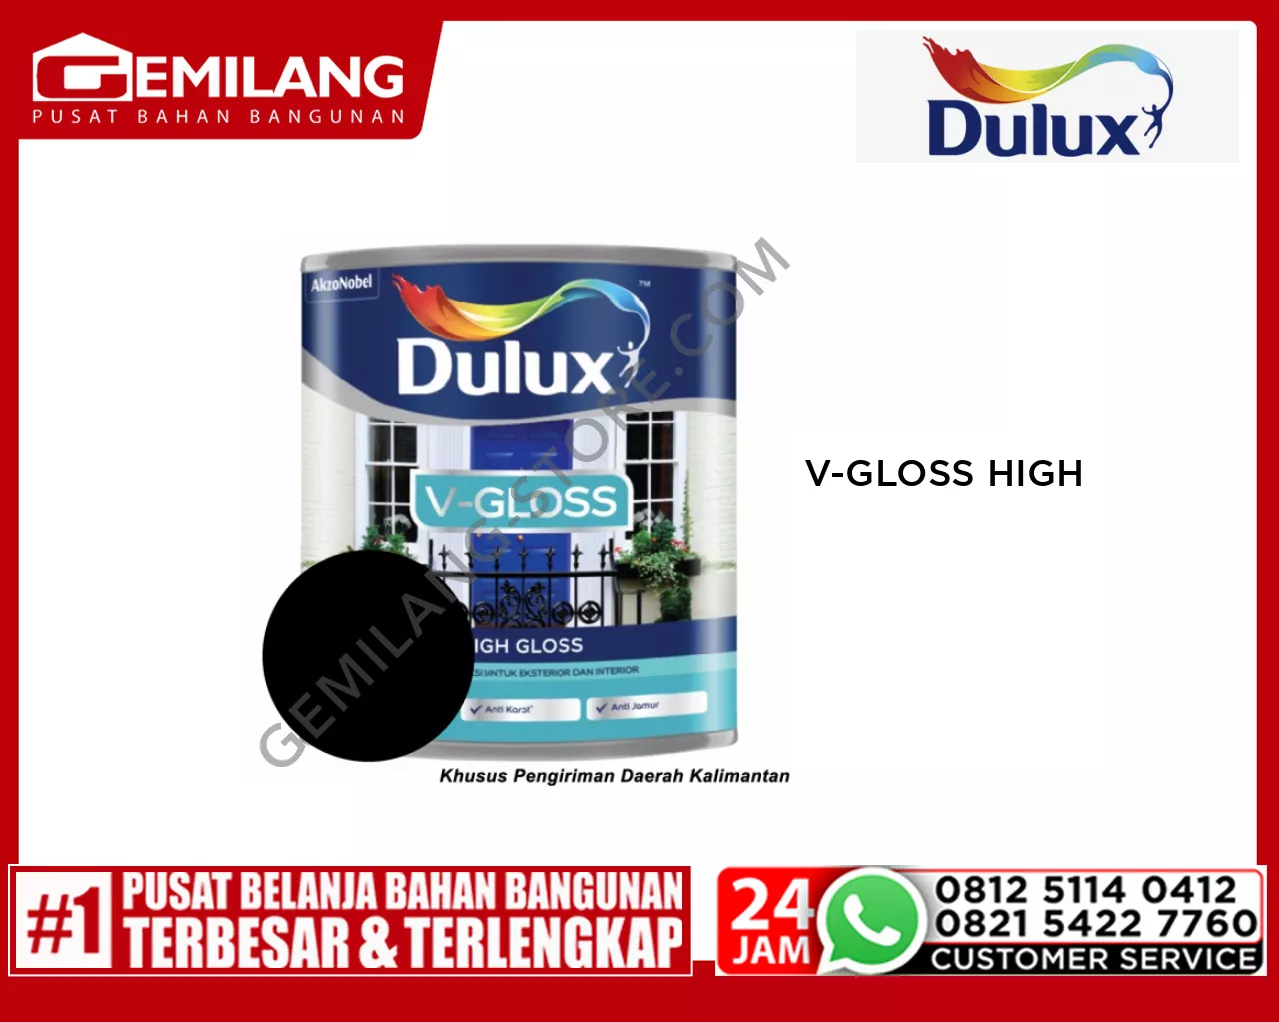 DULUX V-GLOSS HIGH GLOSS BLACK 122 0.8ltr